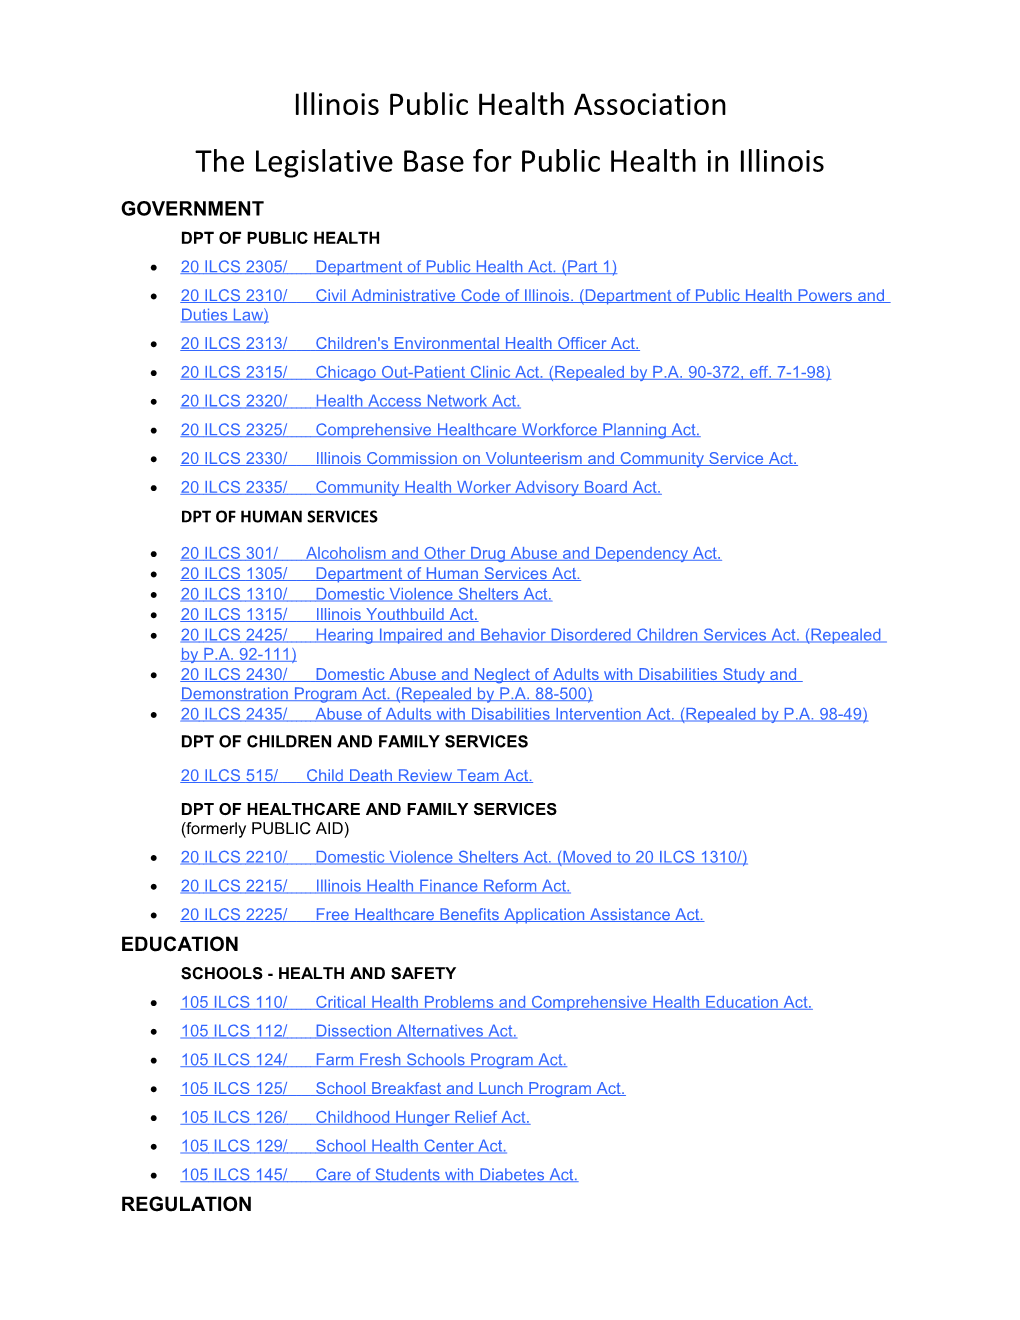 IPHA the Legislative Base for Public Health in Illinois